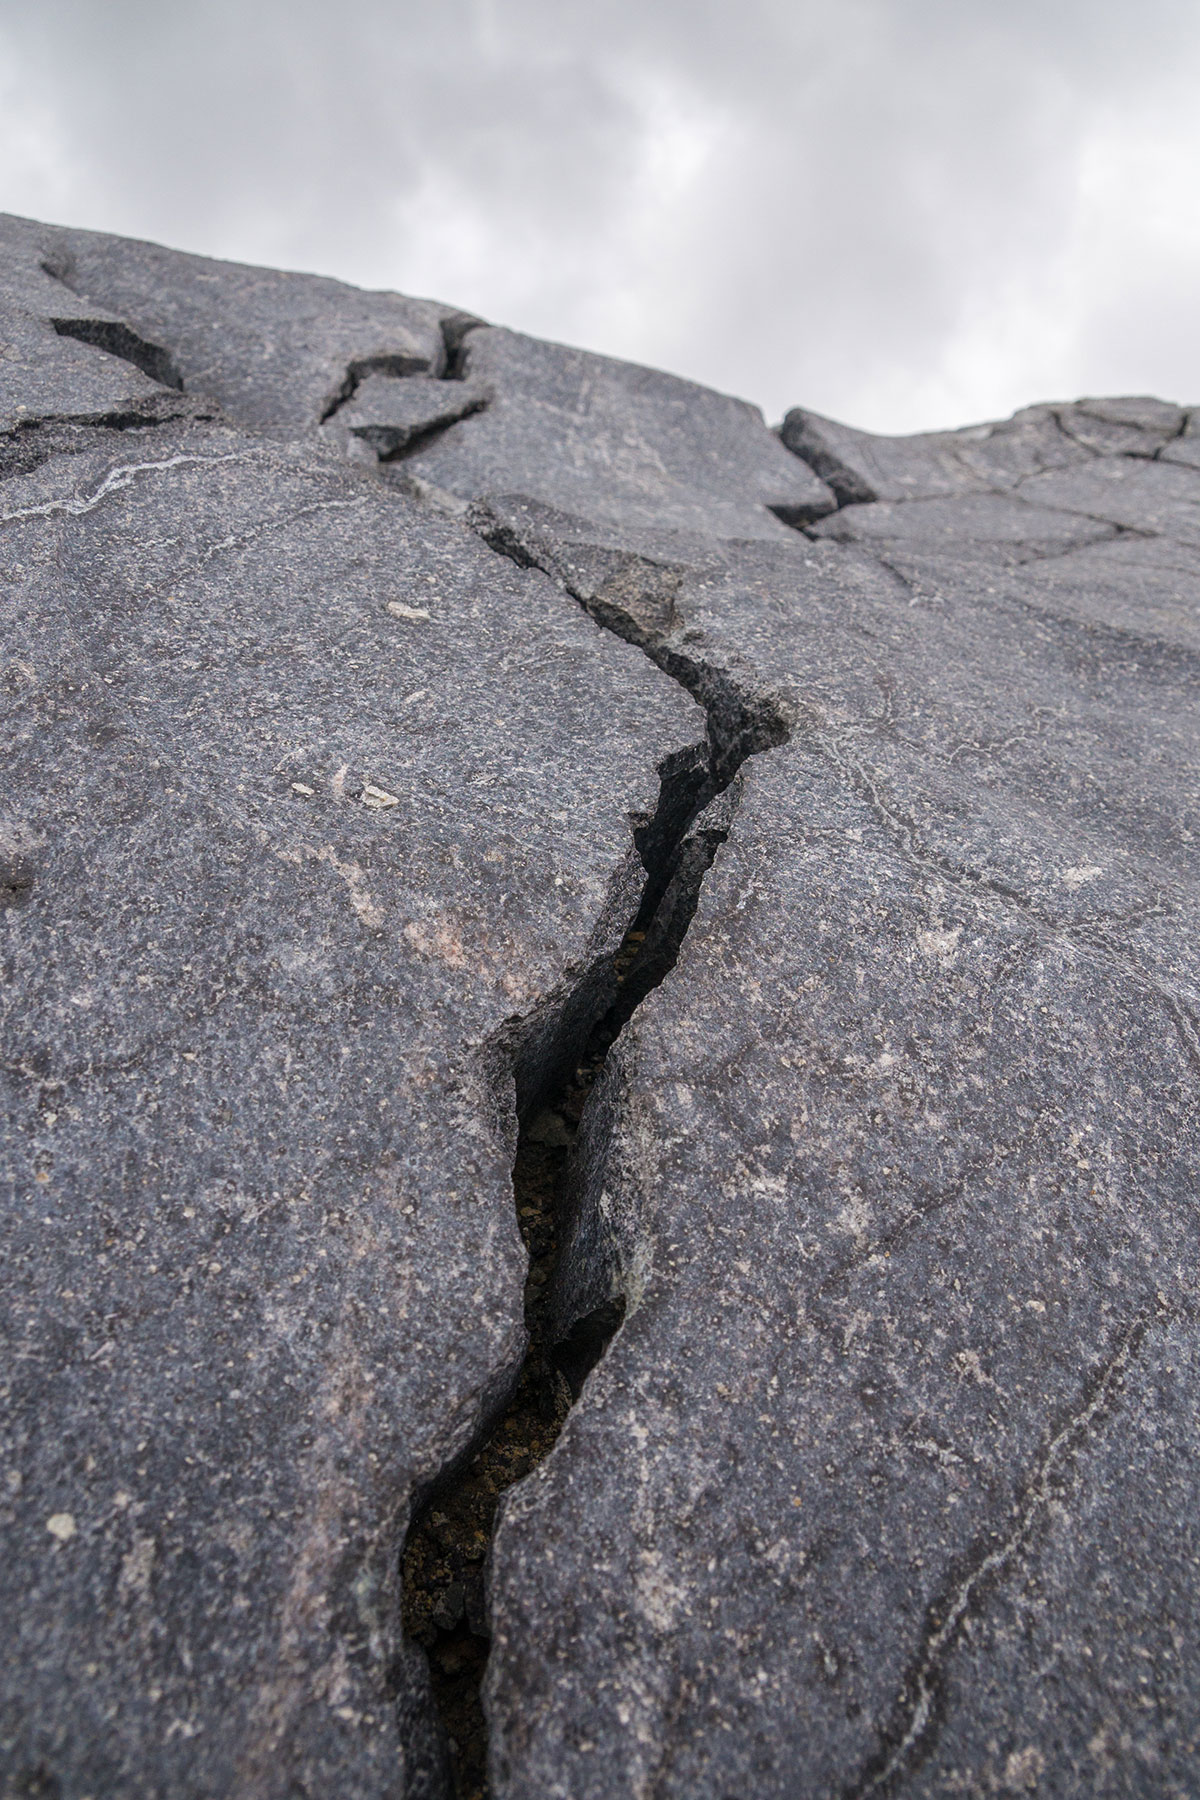 Cracked Rock at Mt. Lokon, Manado, Indonesia